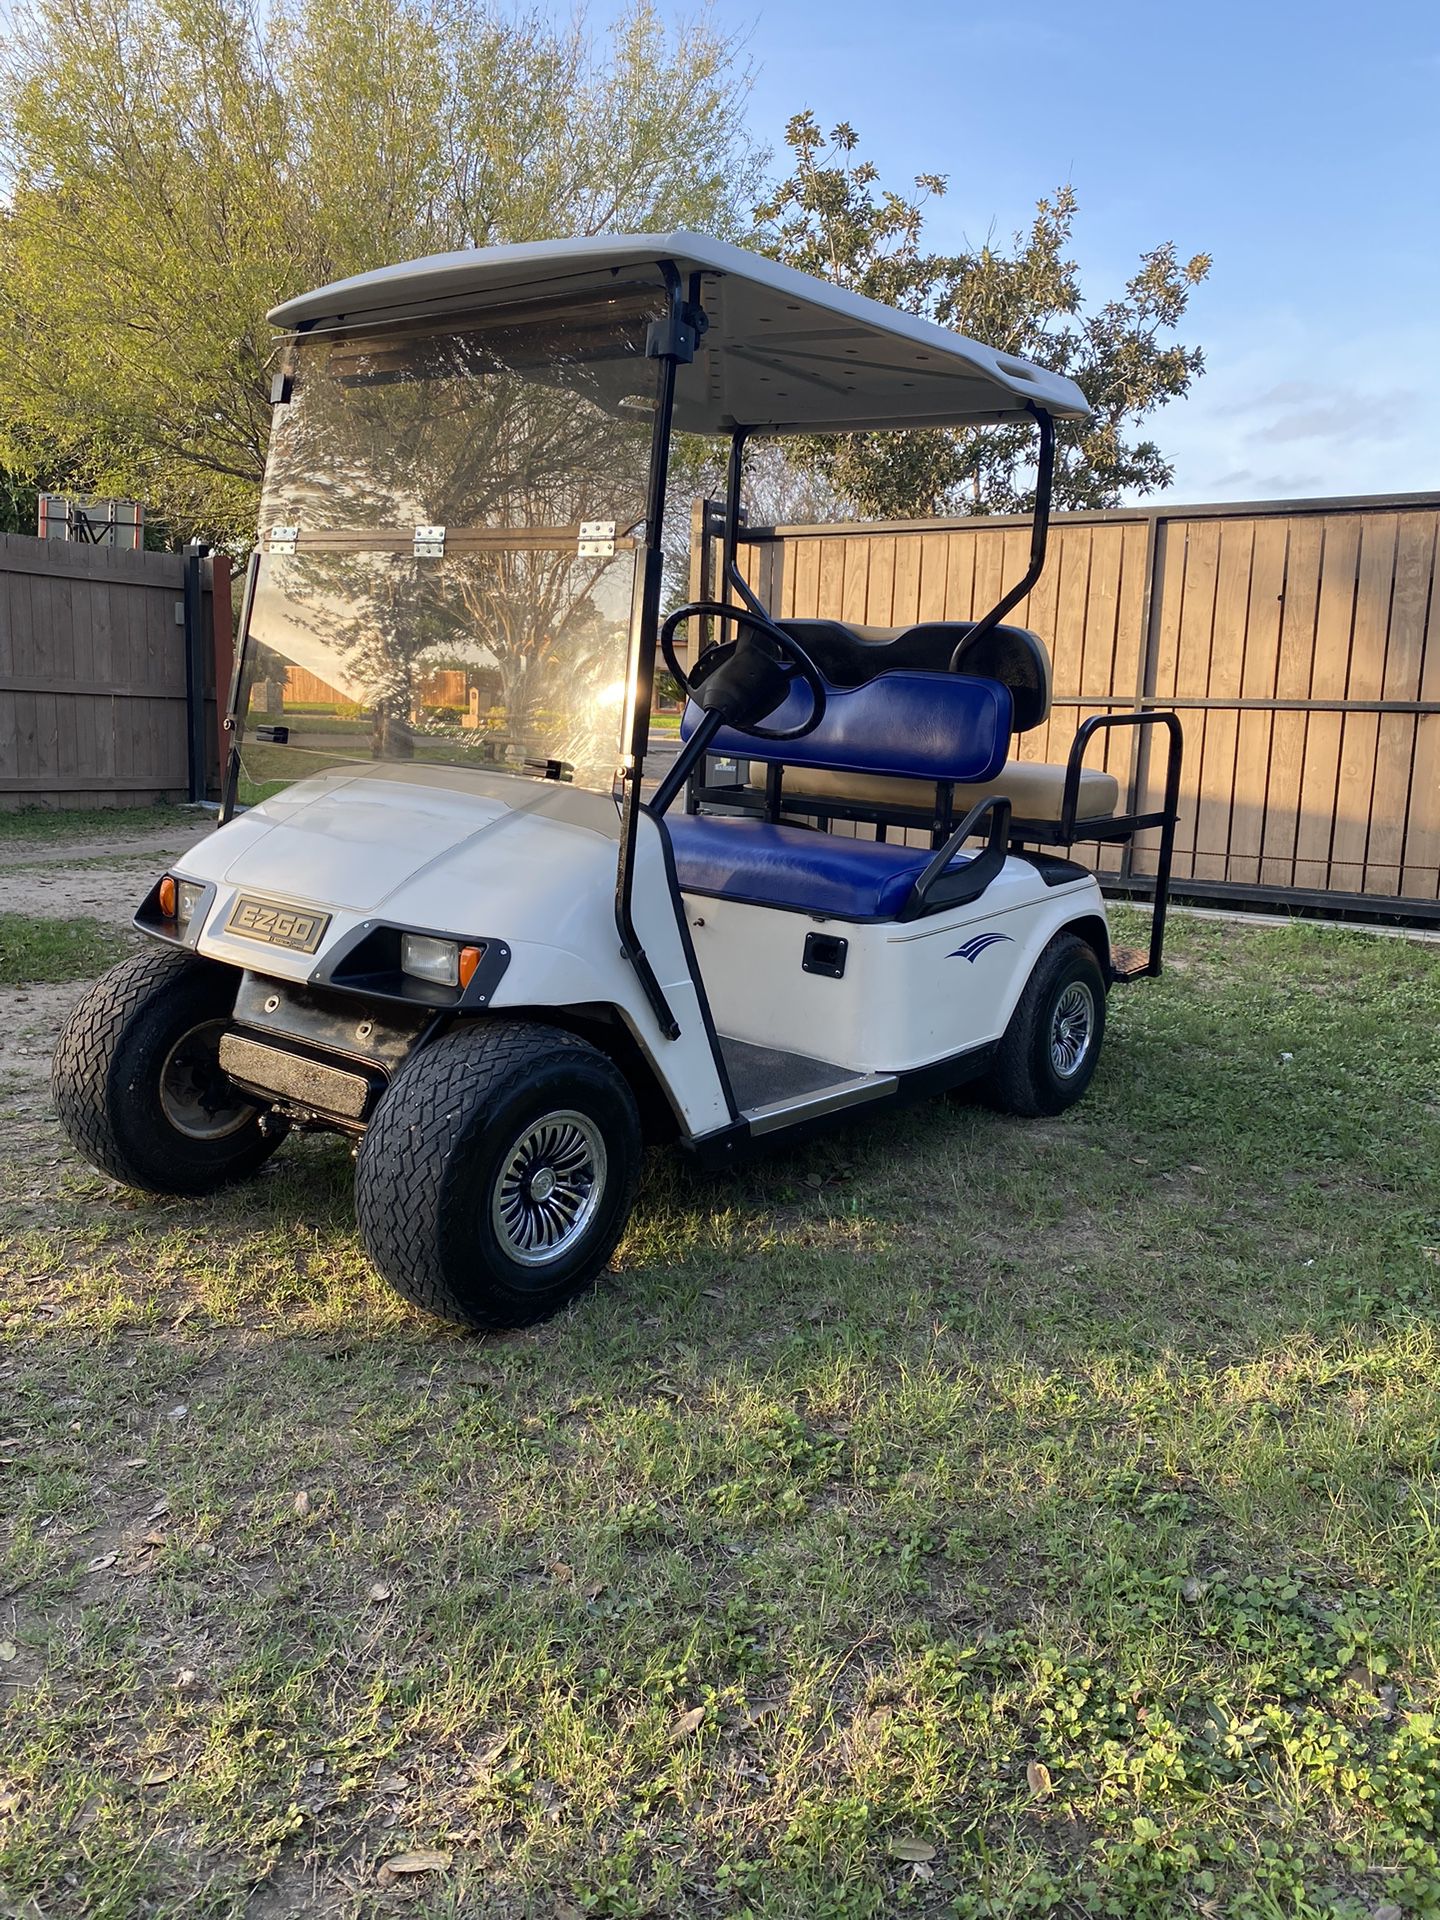 Ezgo Golf Cart for Sale in Mcallen, TX - OfferUp